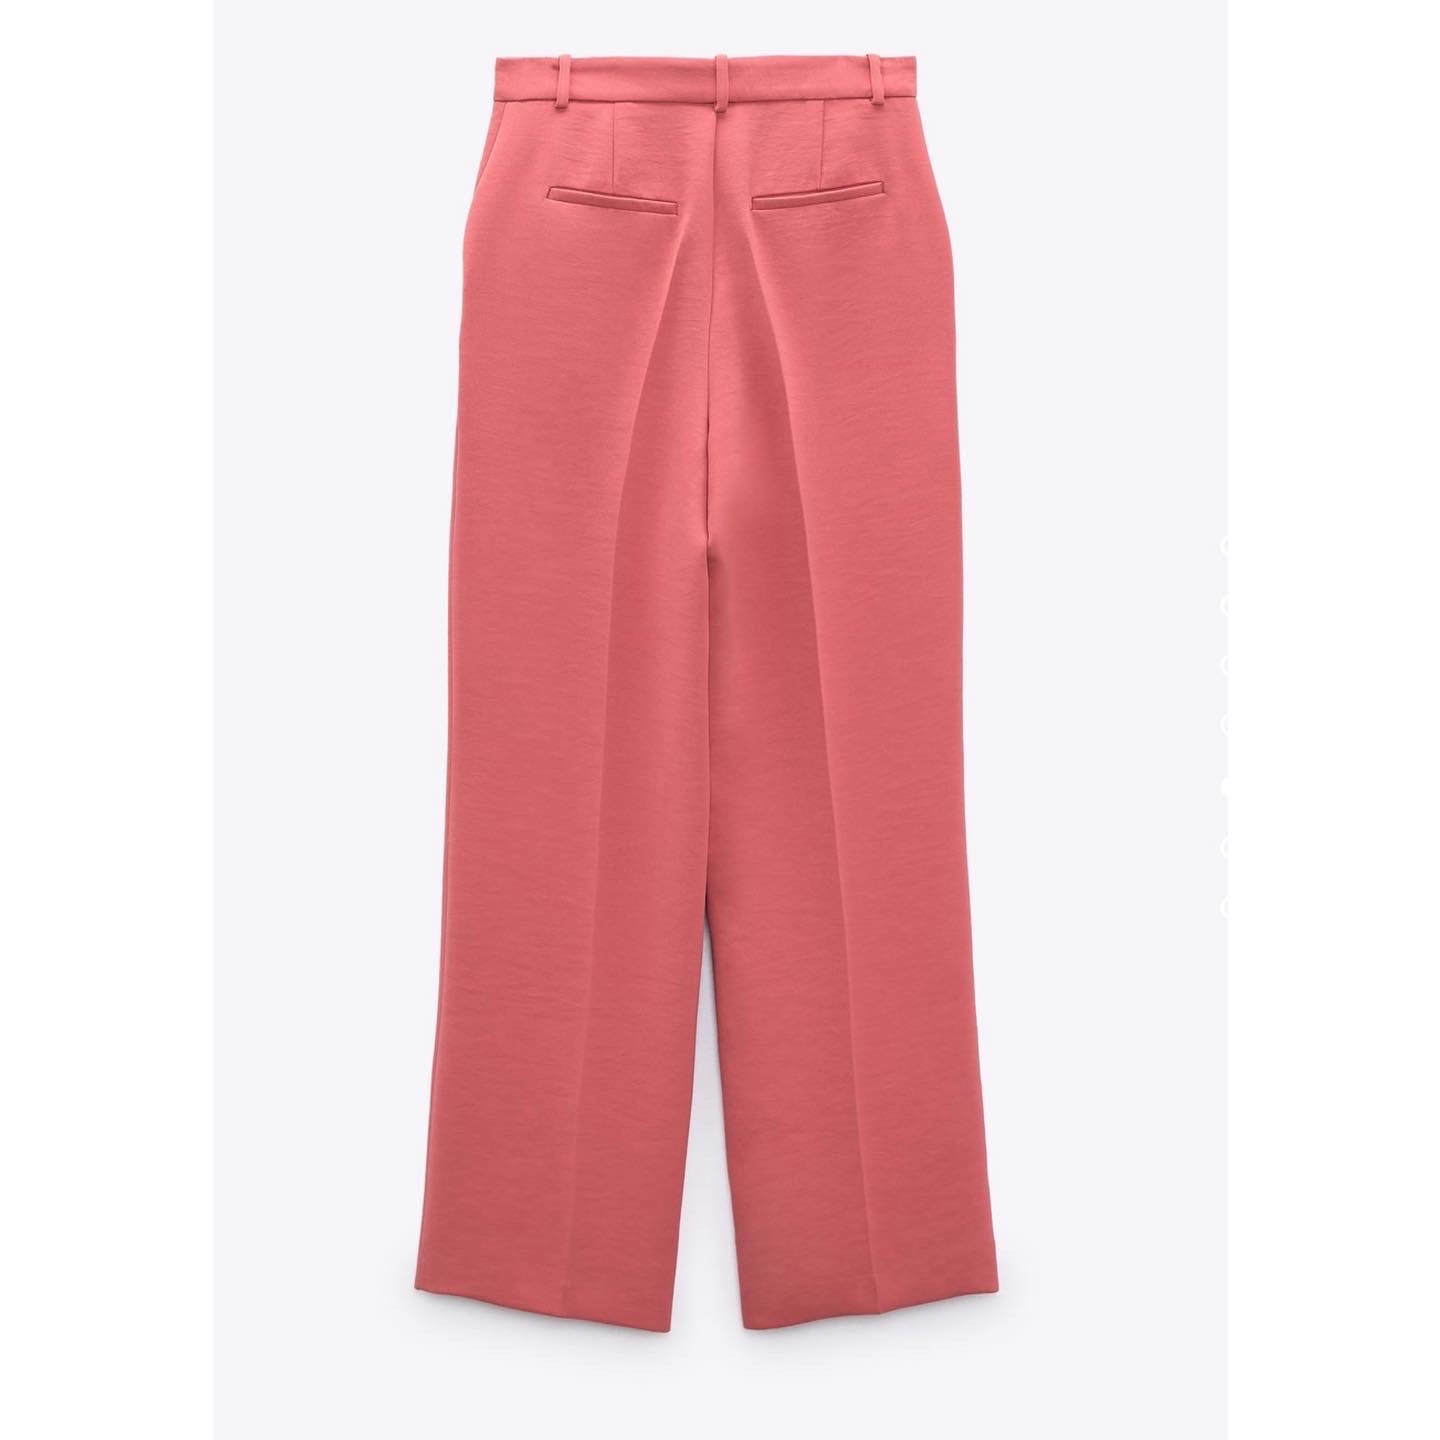 Zara Menswear Style Pants